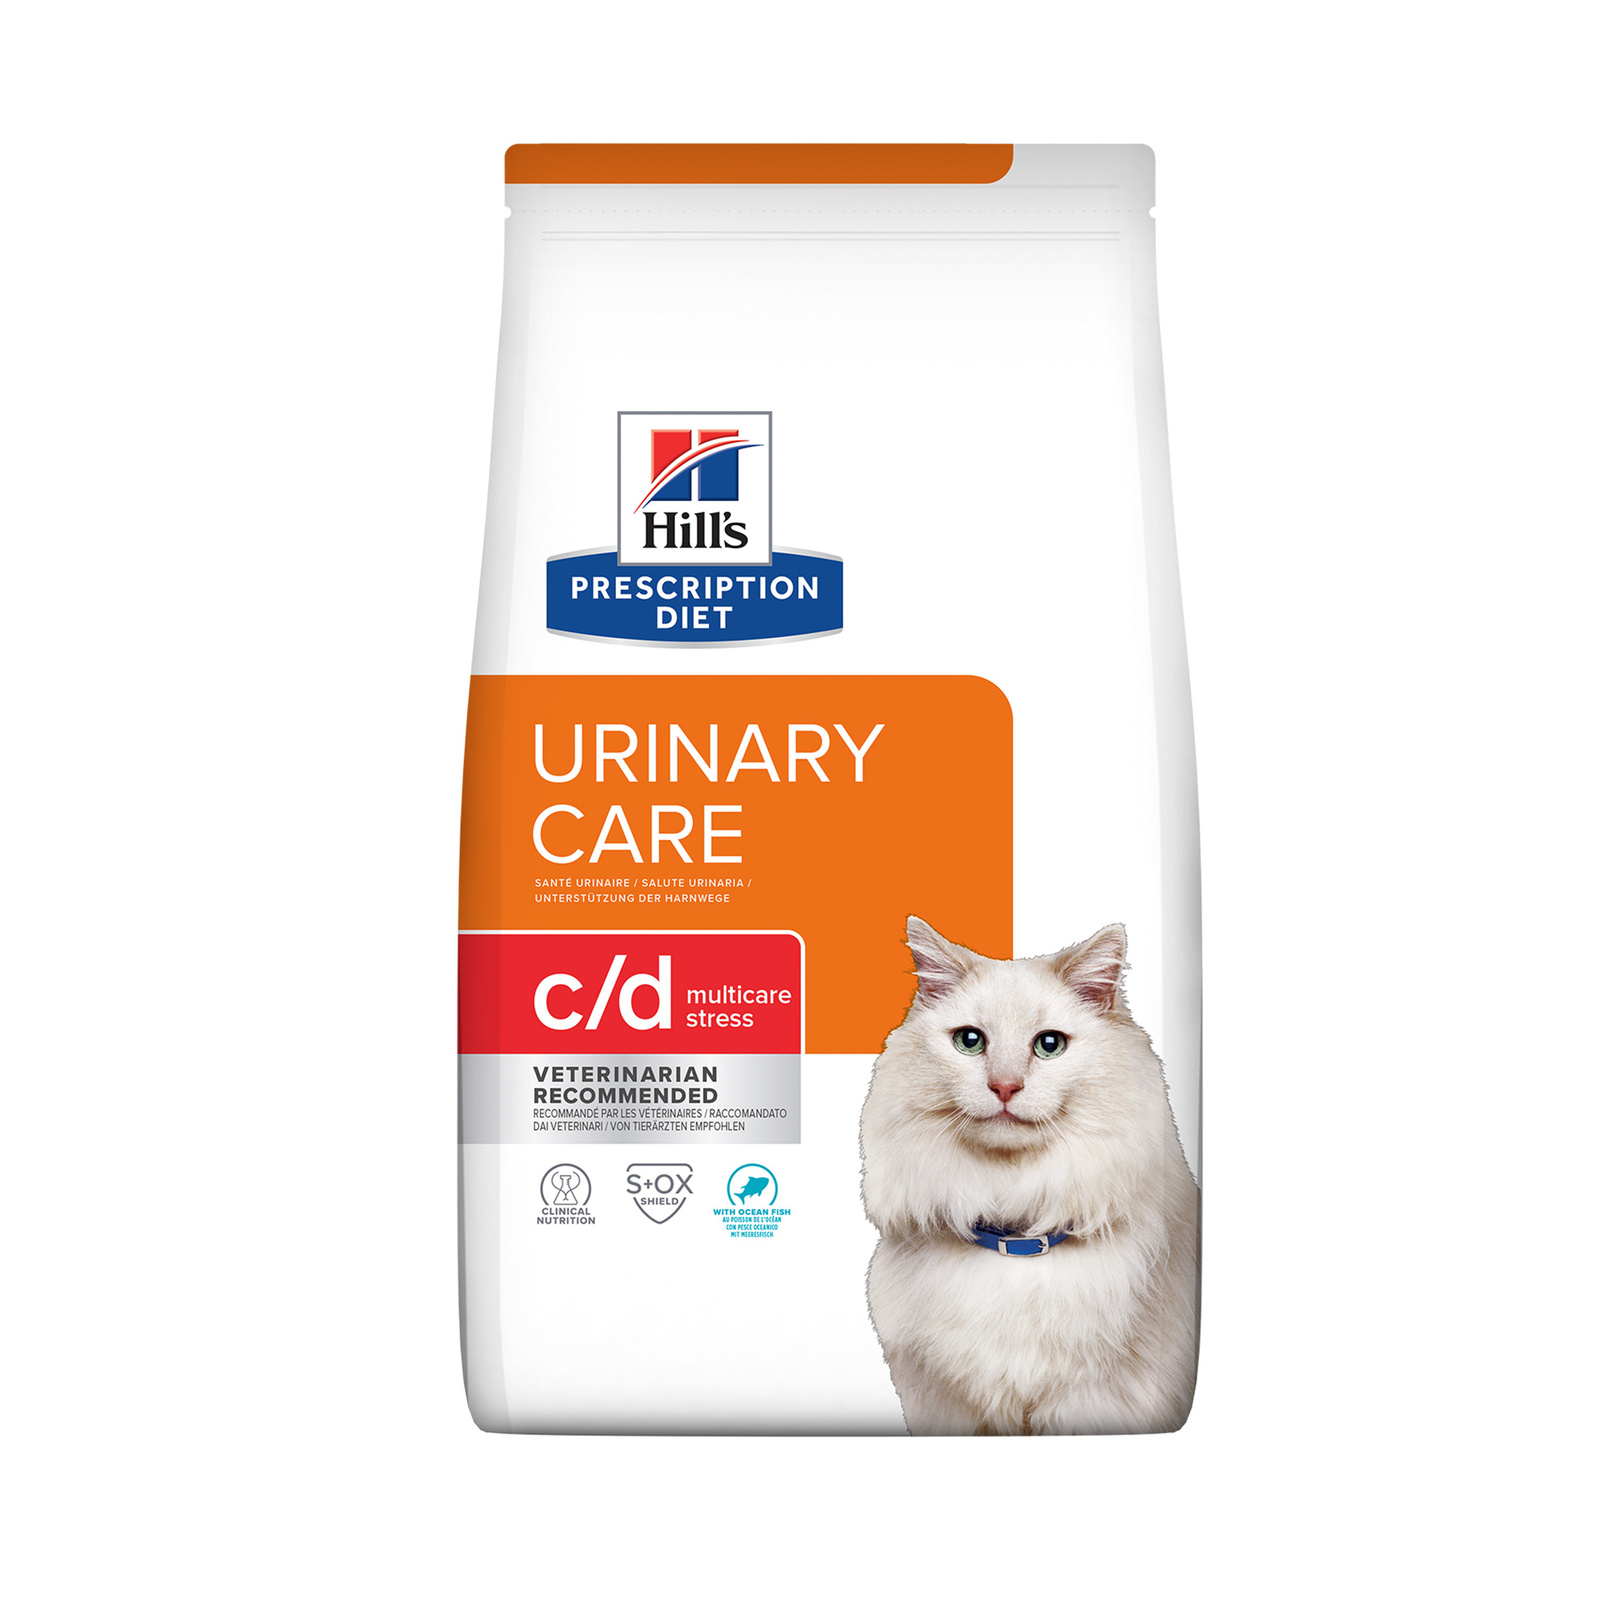 Hill's Prescription Diet сухой корм для кошек C/d  профилактика МКБ при стрессе с рыбой (Urinary Stress) (8 кг)